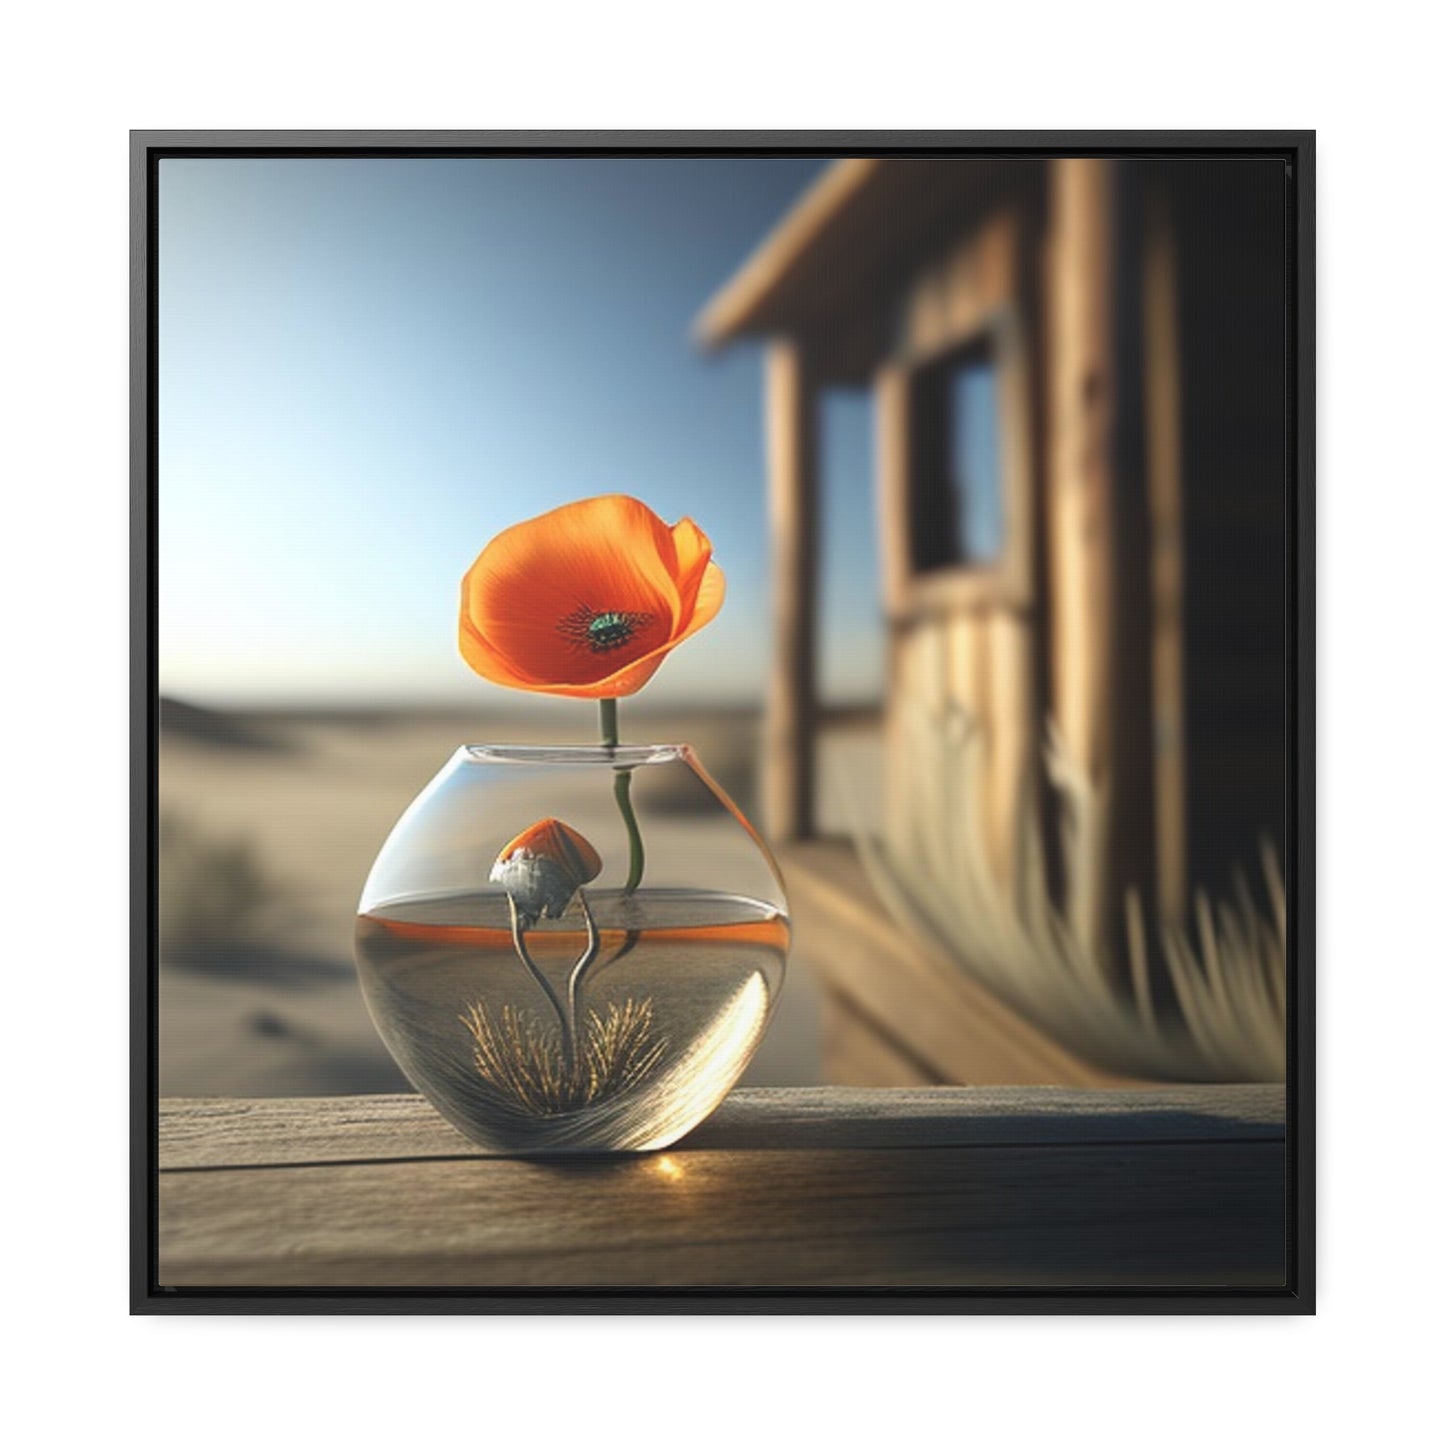 Gallery Canvas Wraps, Square Frame Orange Poppy in a Vase 1